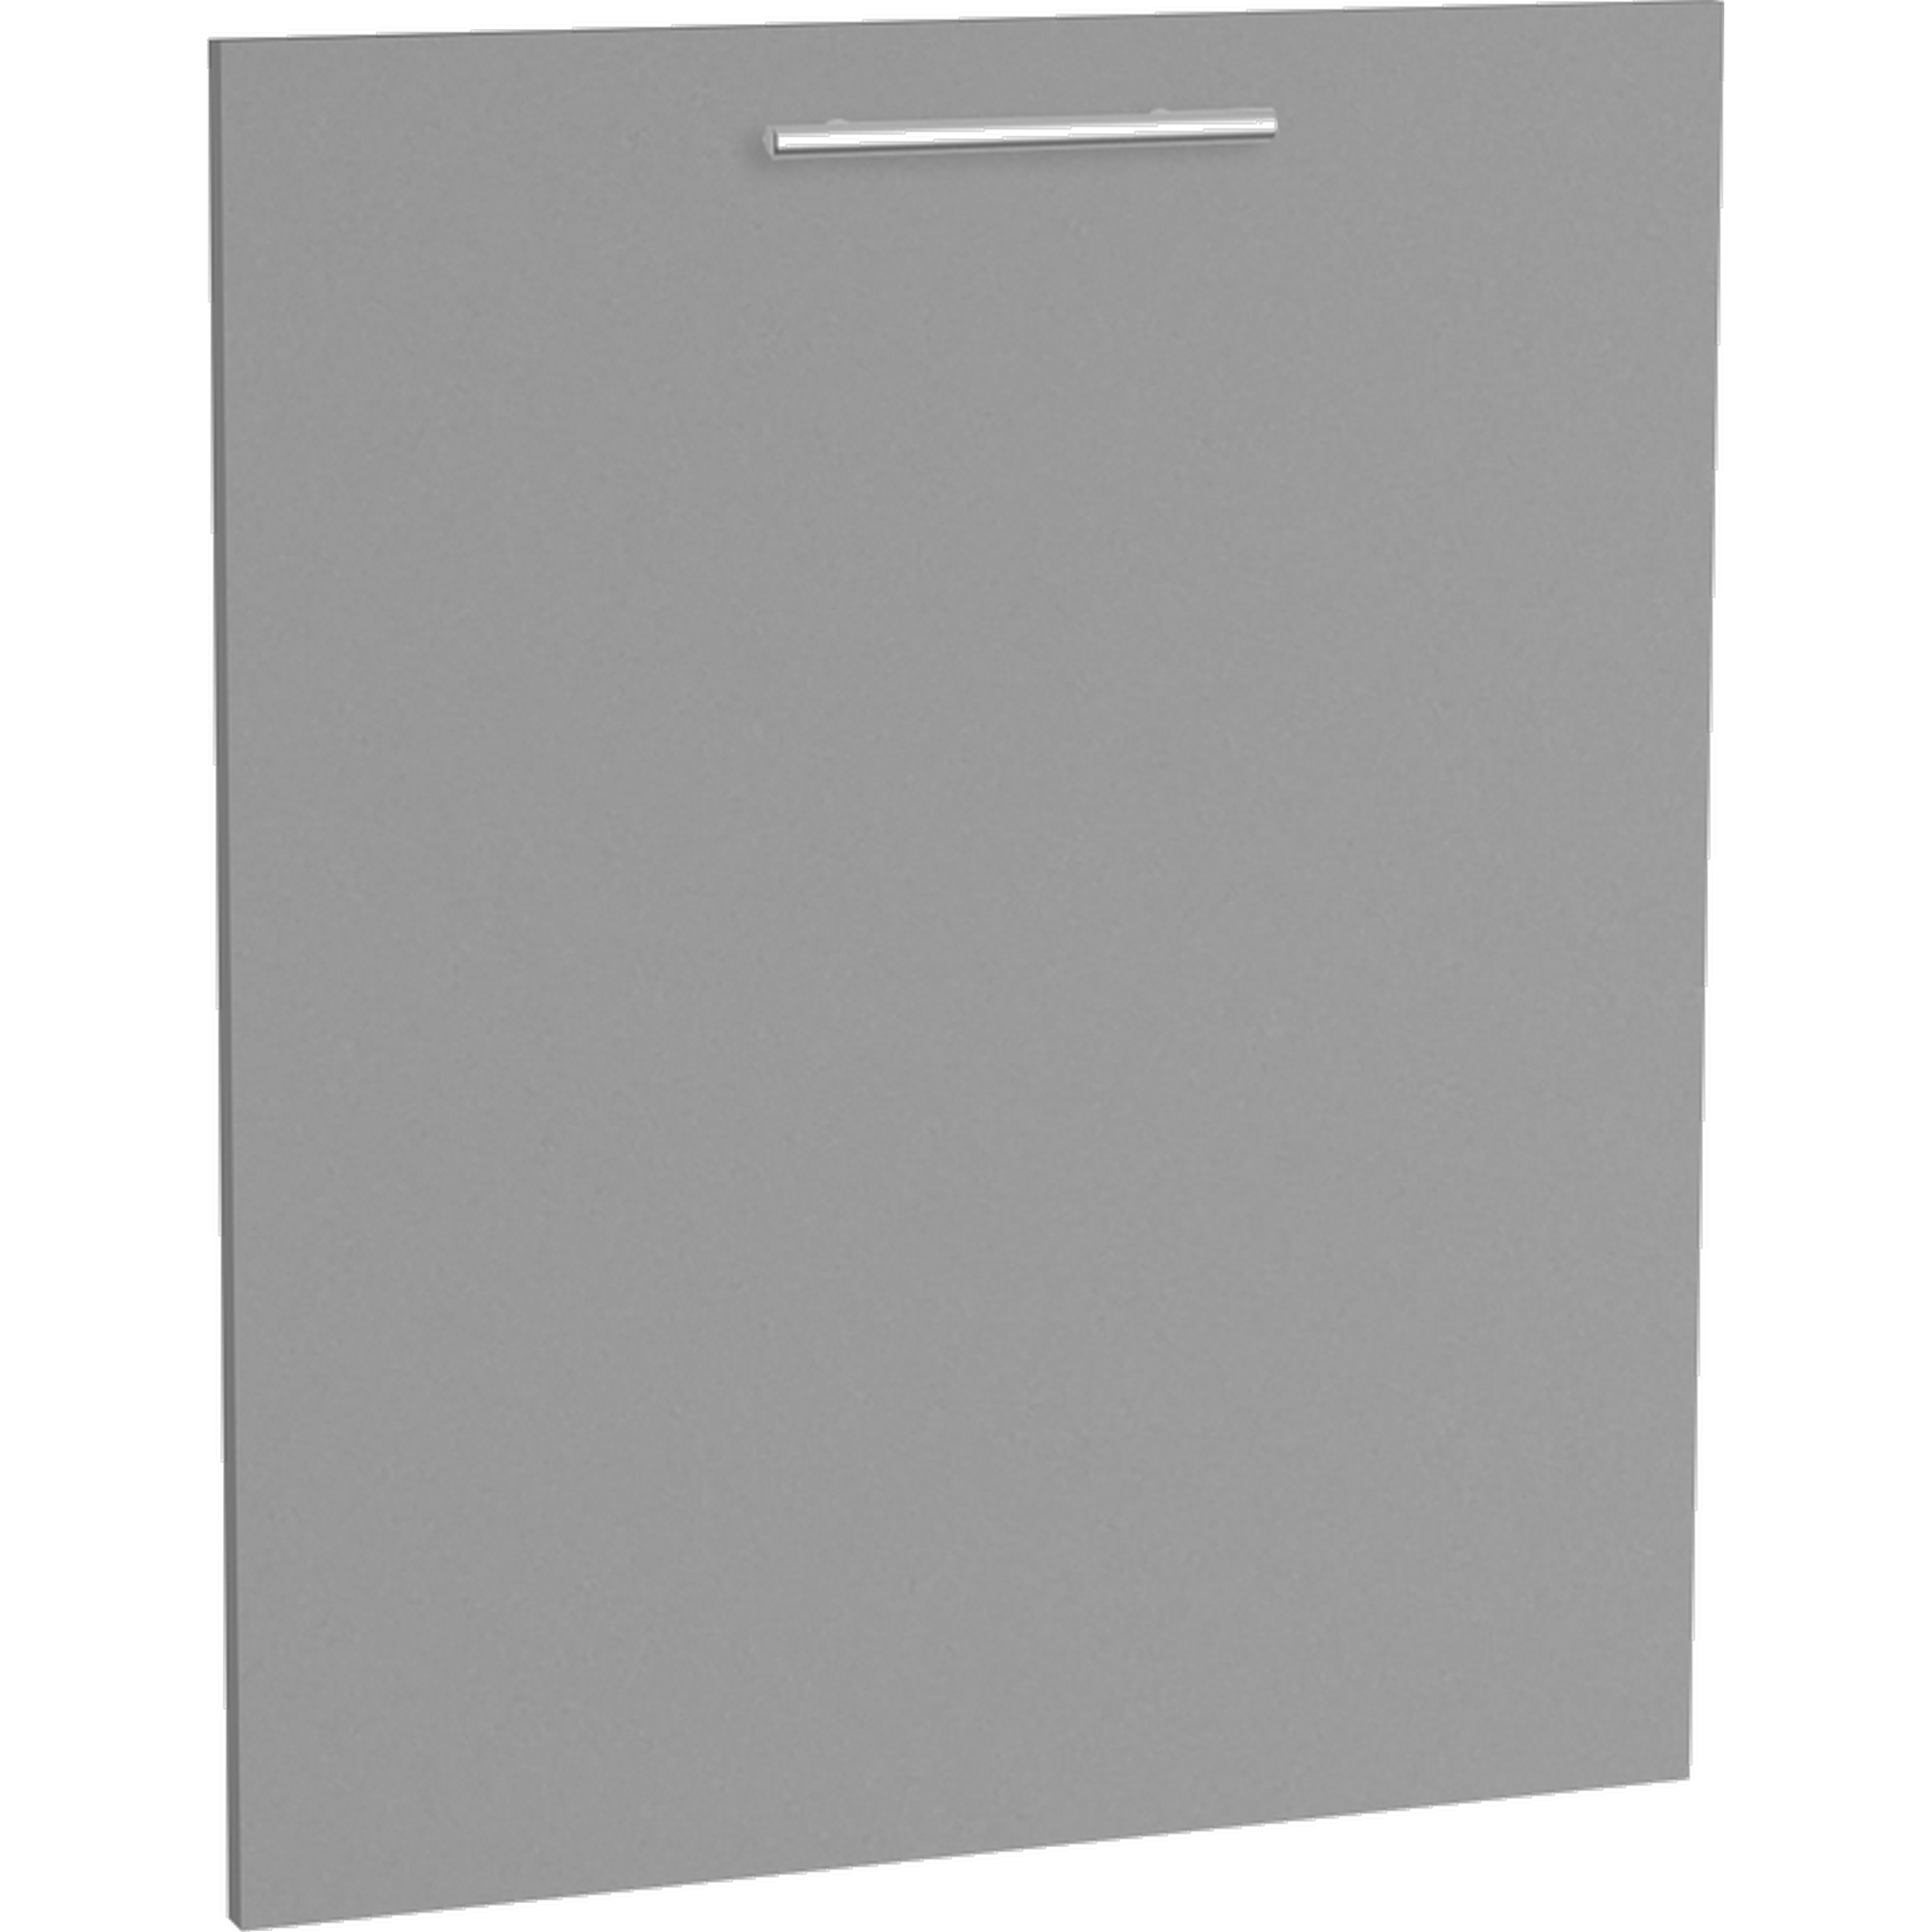 Tür für vollintegrierten Geschirrspüler 'Optikomfort Mats825' grau 59,6 x 70 x 1,6 cm + product picture